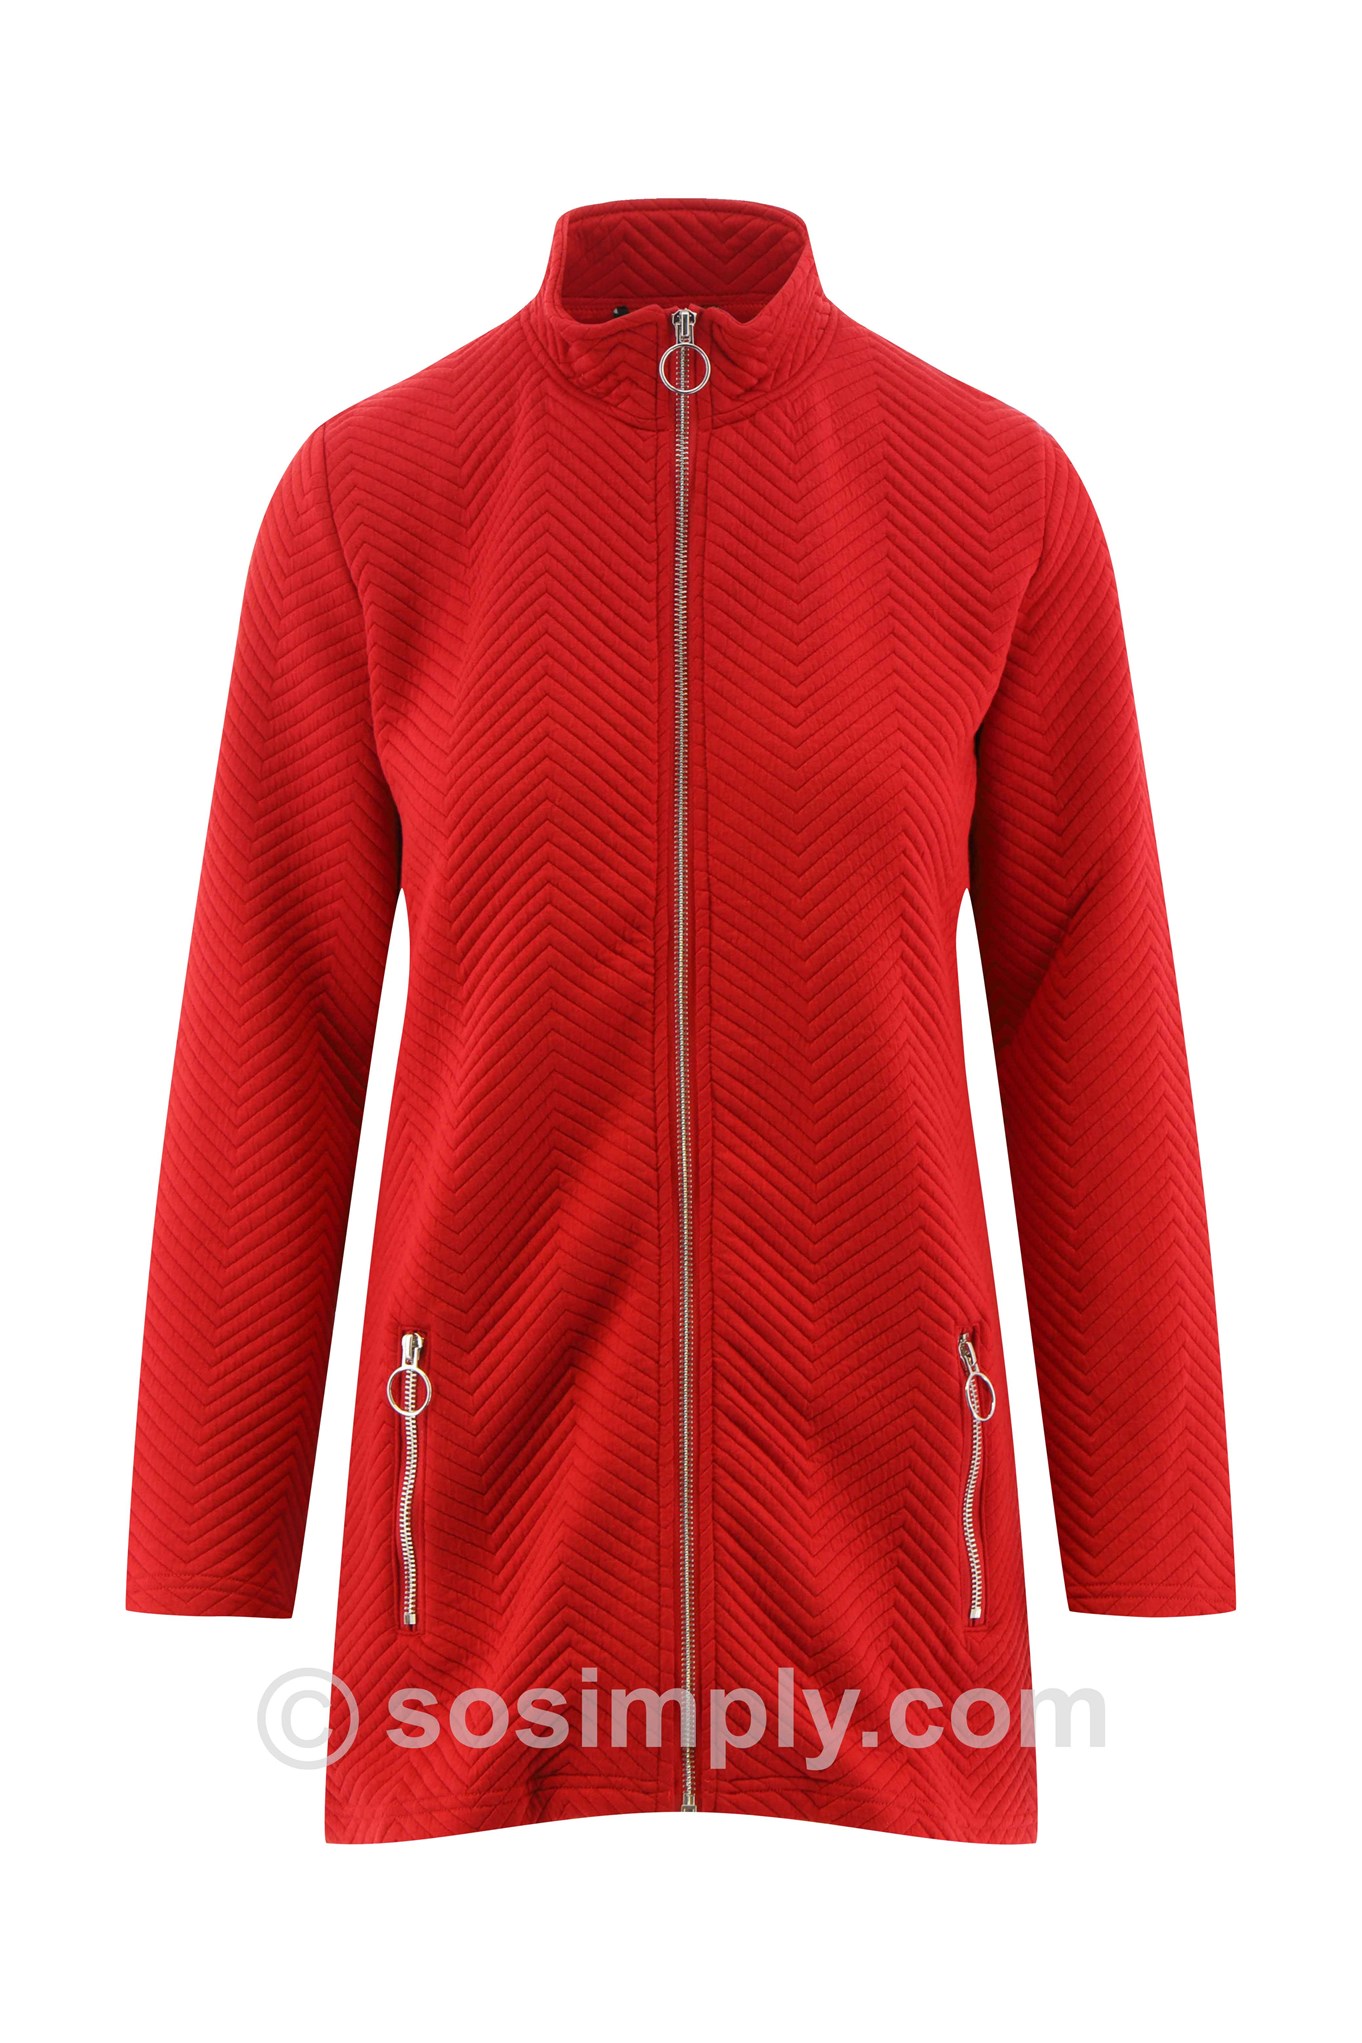 Sunday Joyce Chevron Jersey Zip Jacket in Ruby Red